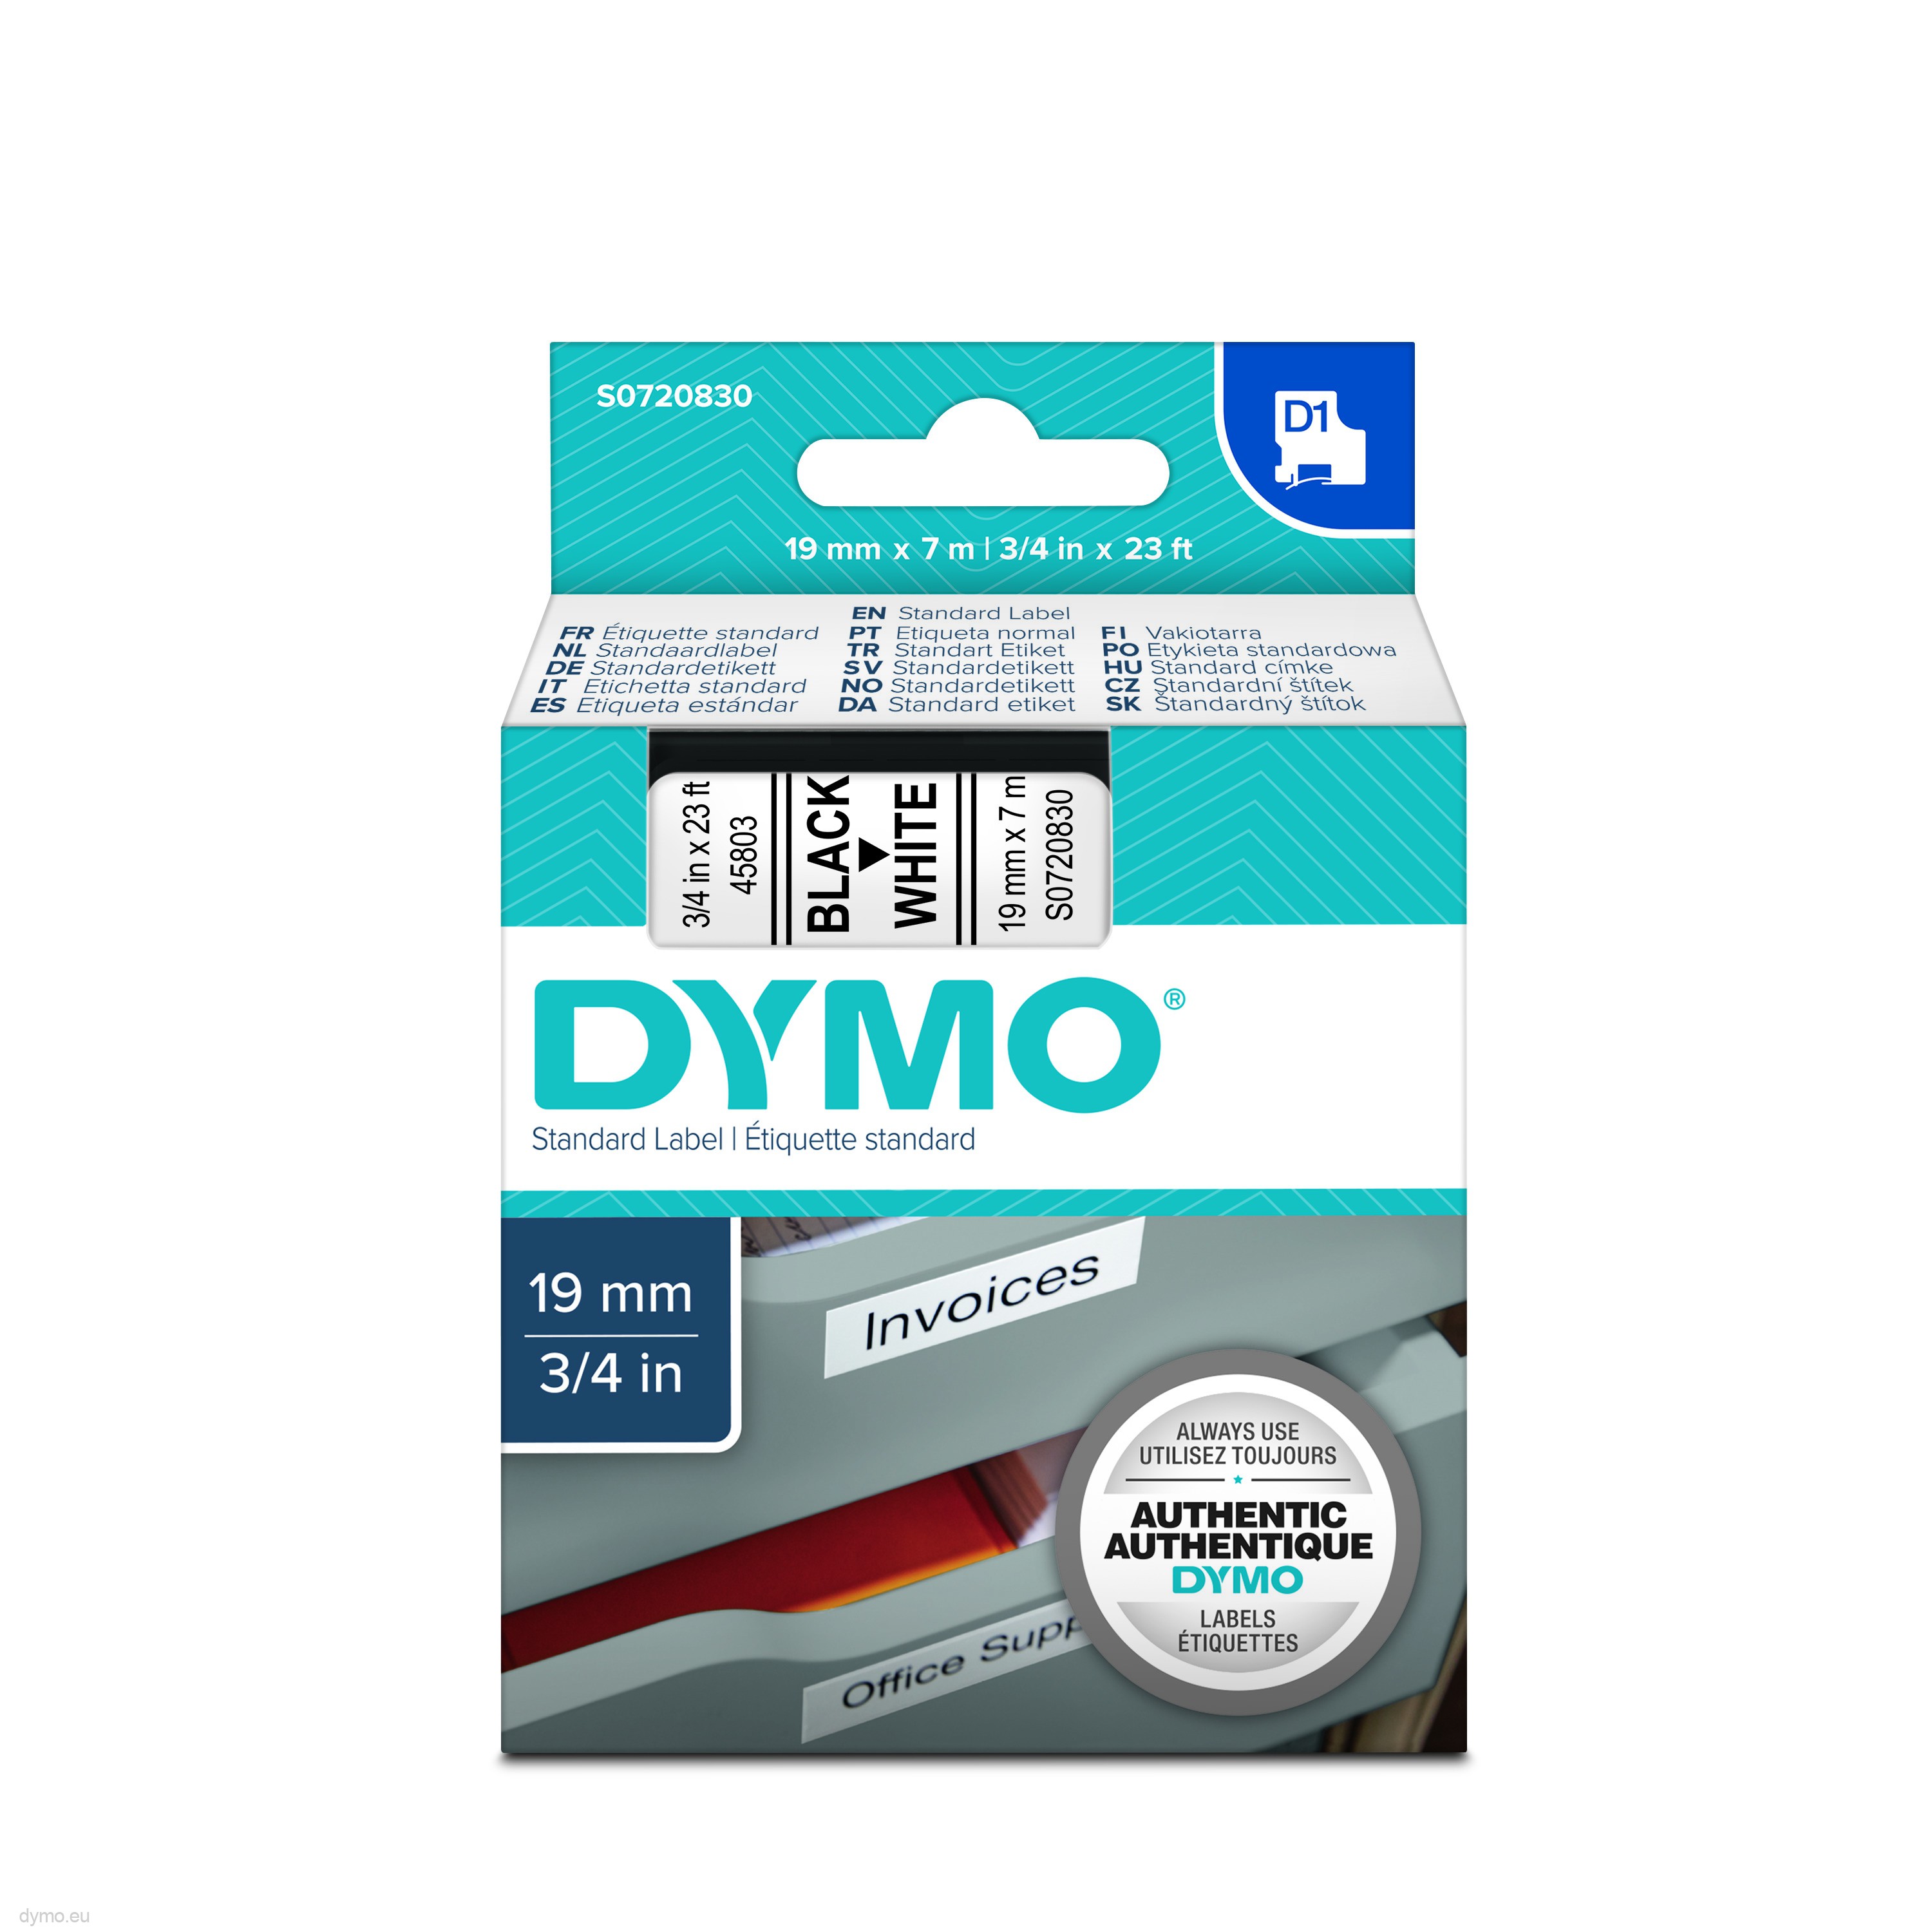 Dymo DYM45803 Tape for sale online